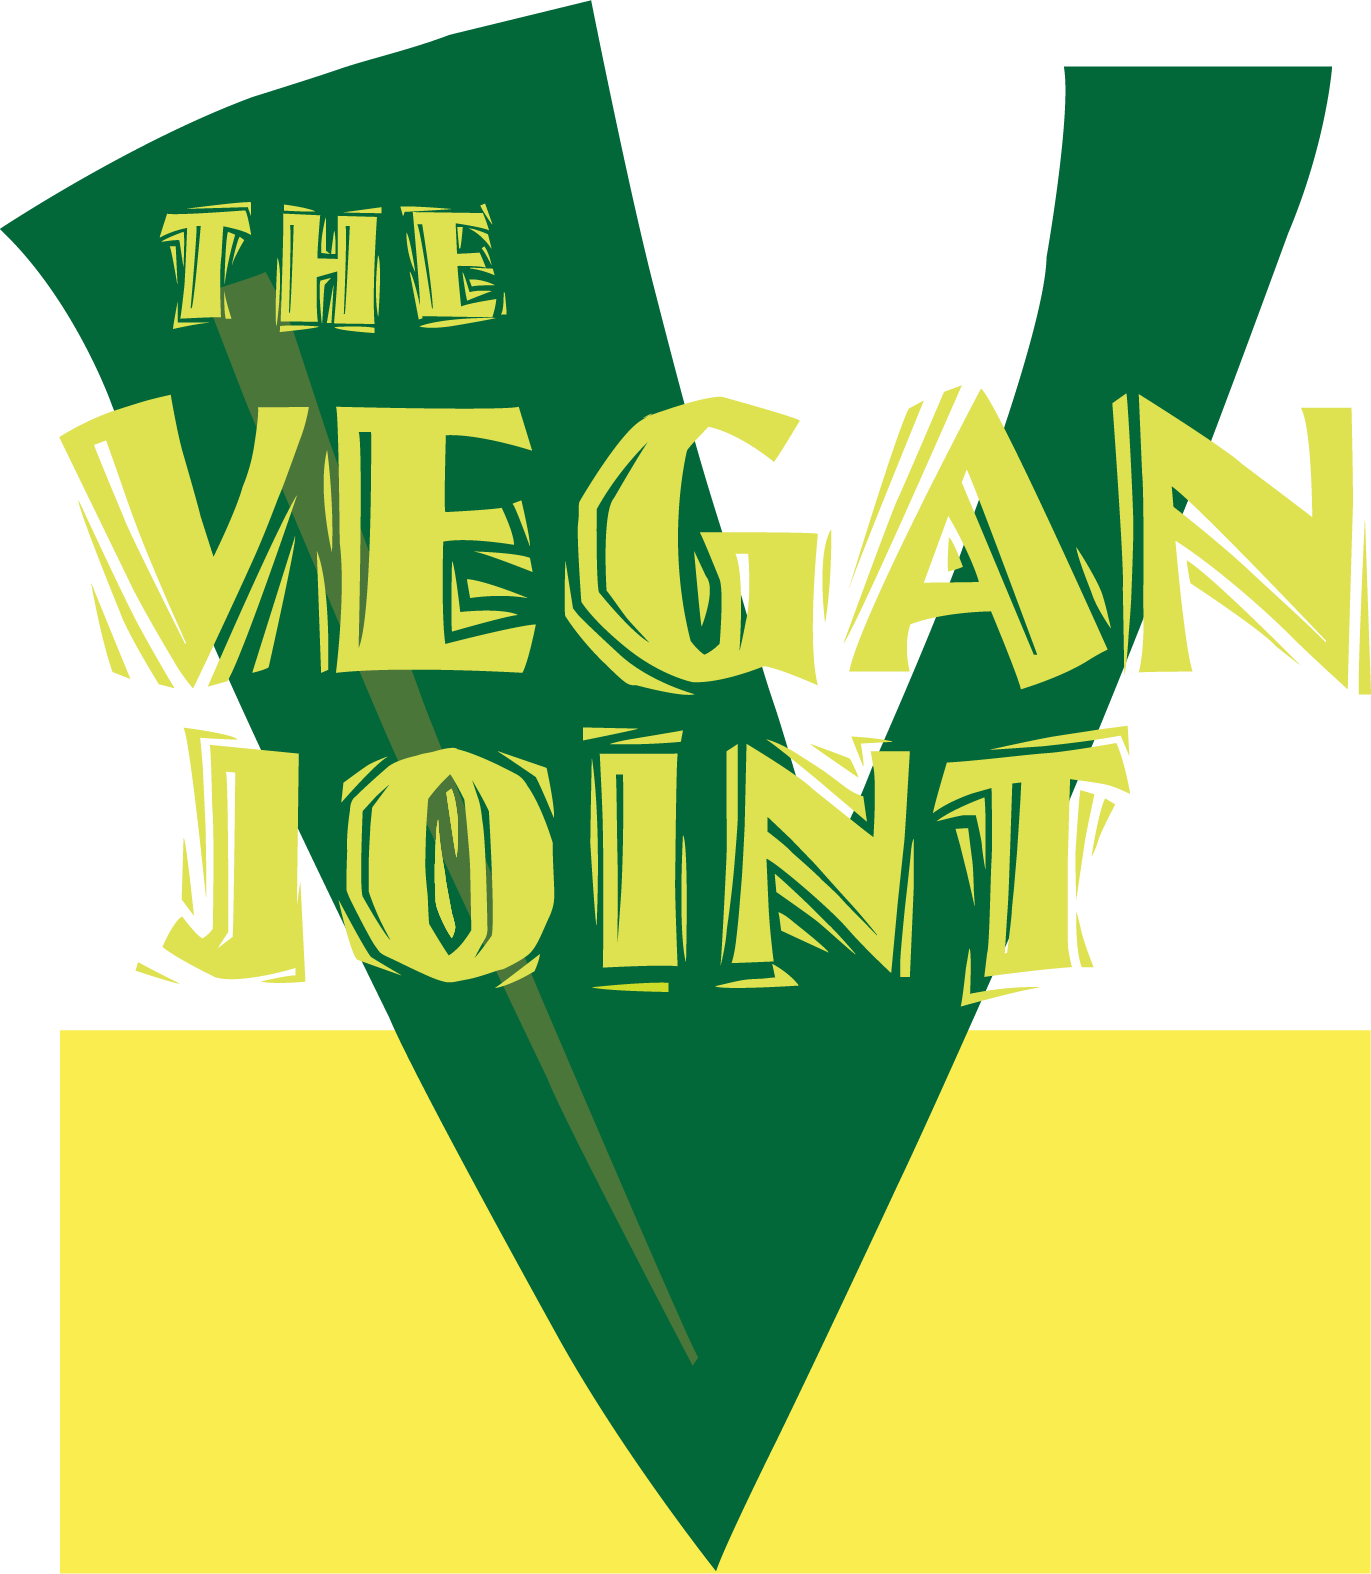 The Vegan joint